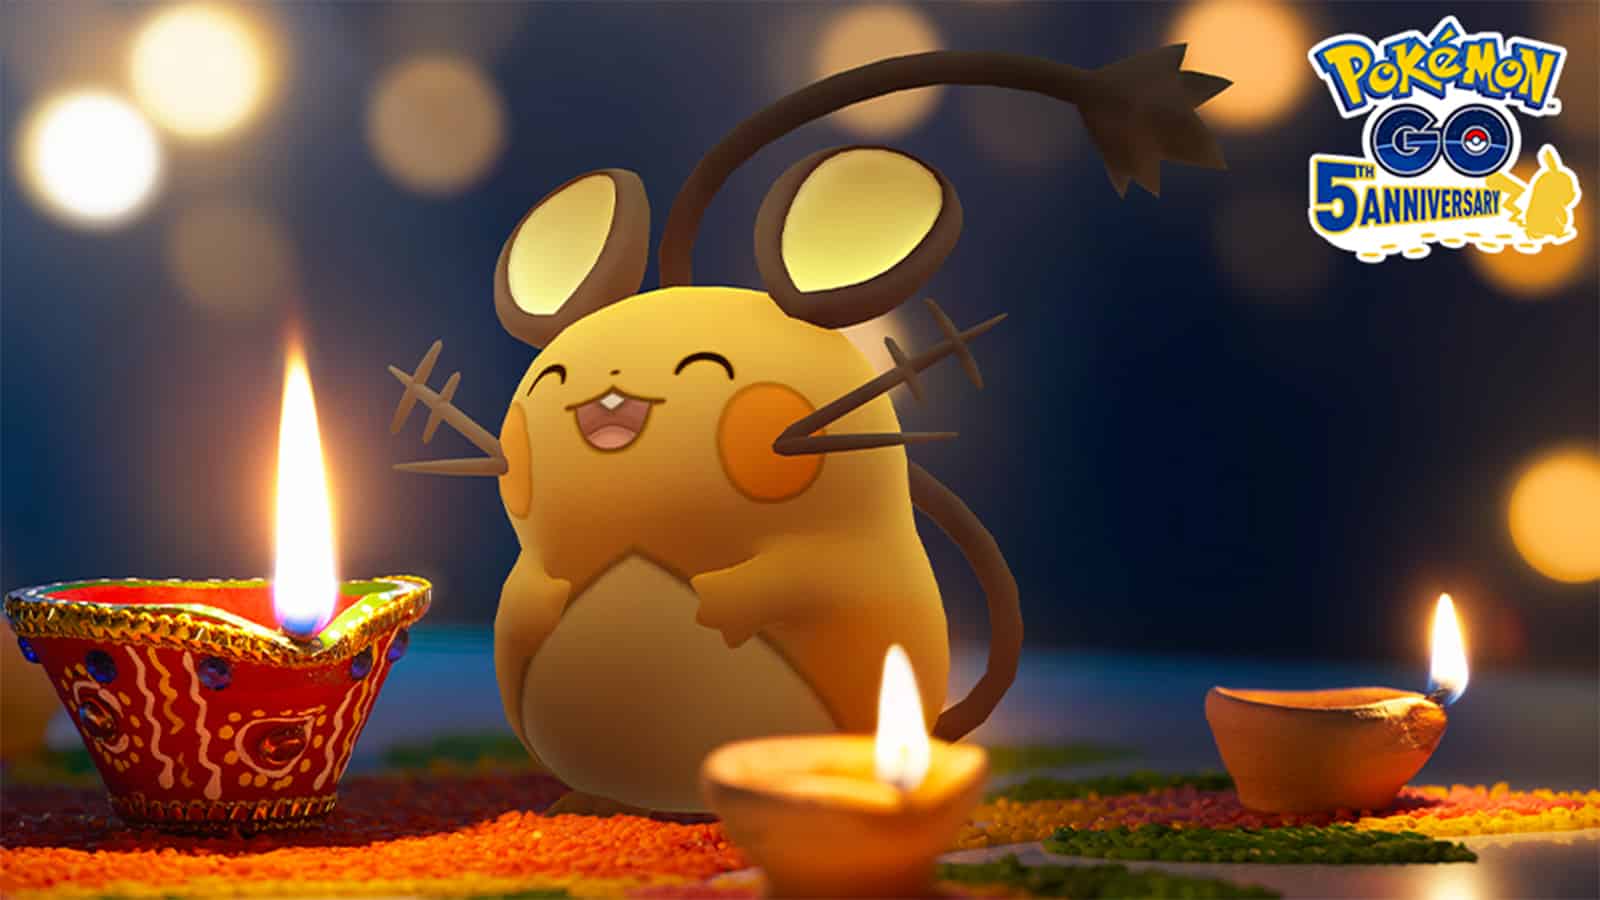 Dedenne in Pokemon Gos Festival of Lights